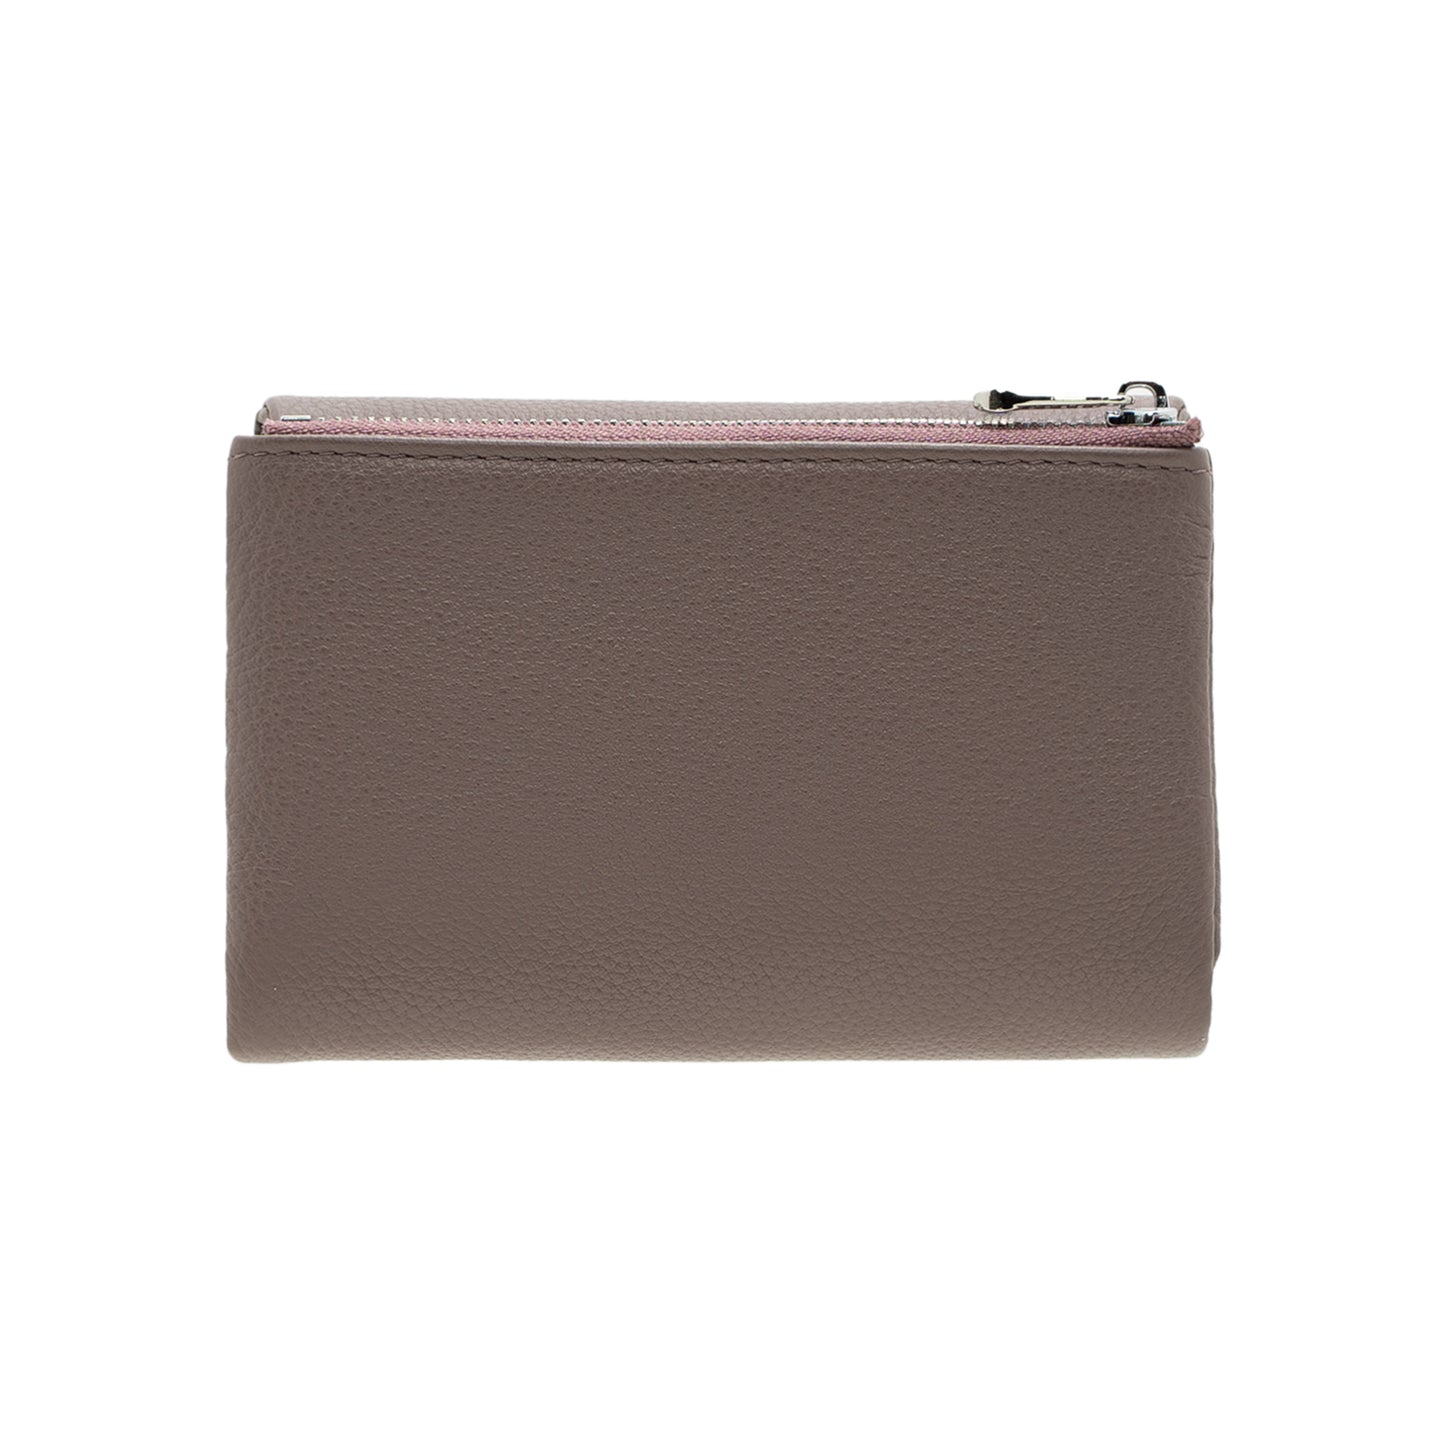 MOSSIMO Ladies Tri-Fold Wallet